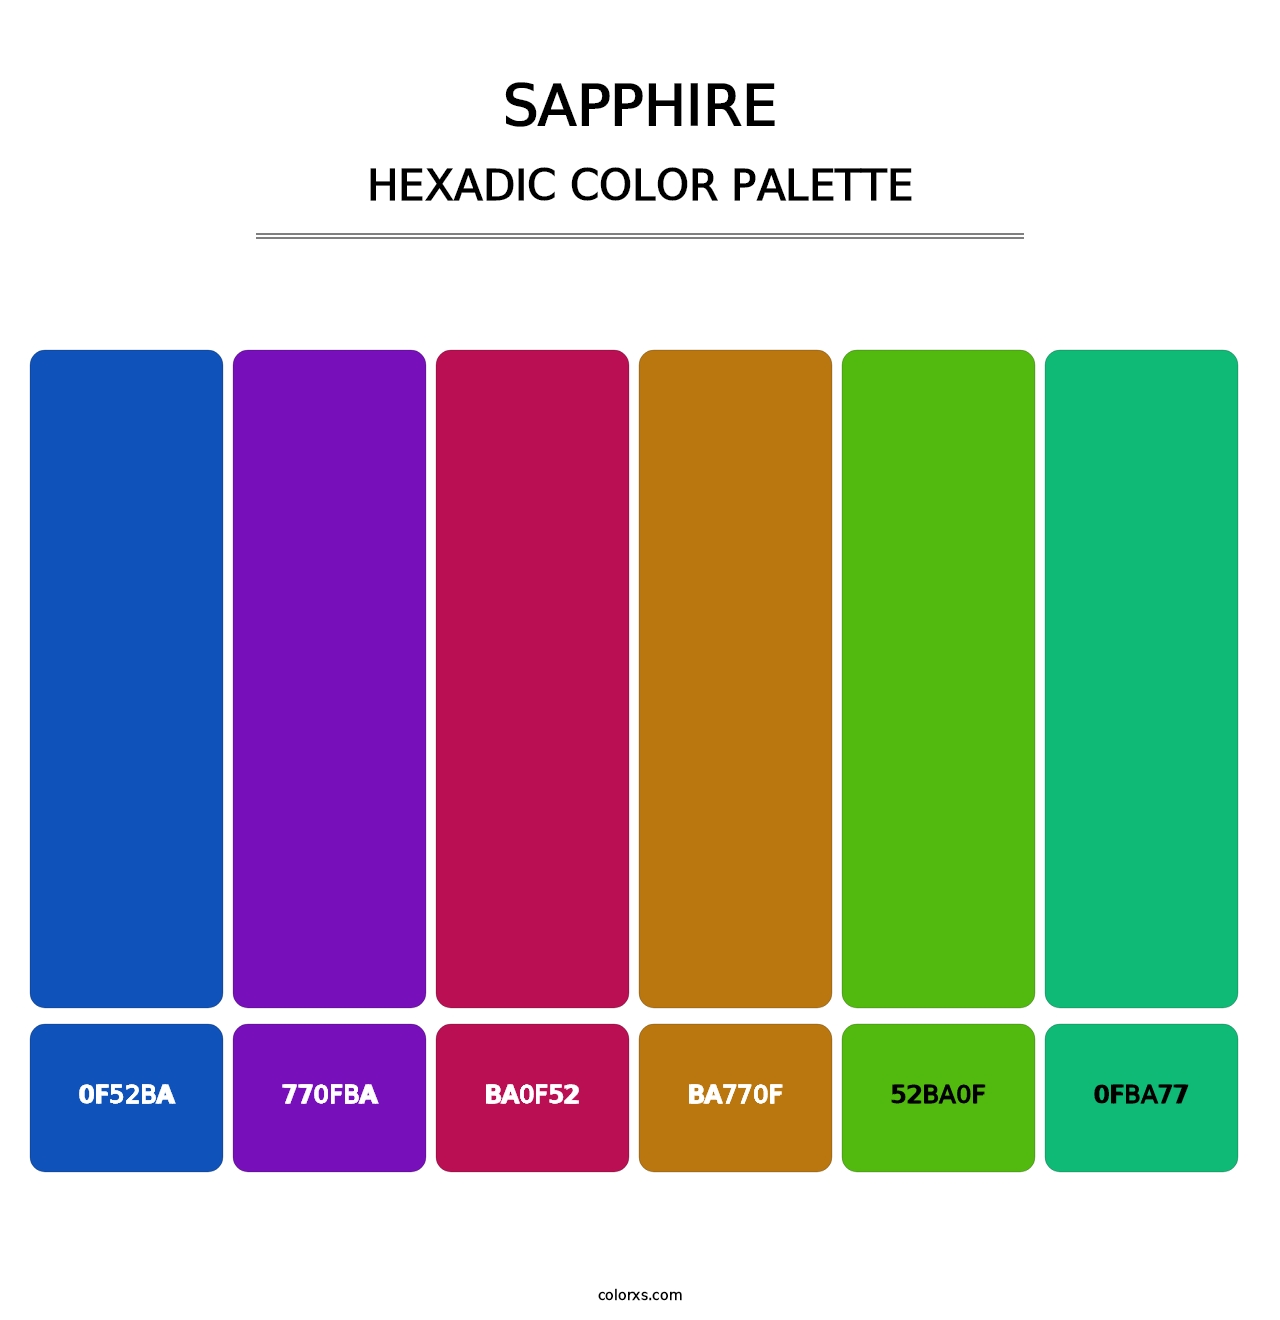 Sapphire - Hexadic Color Palette